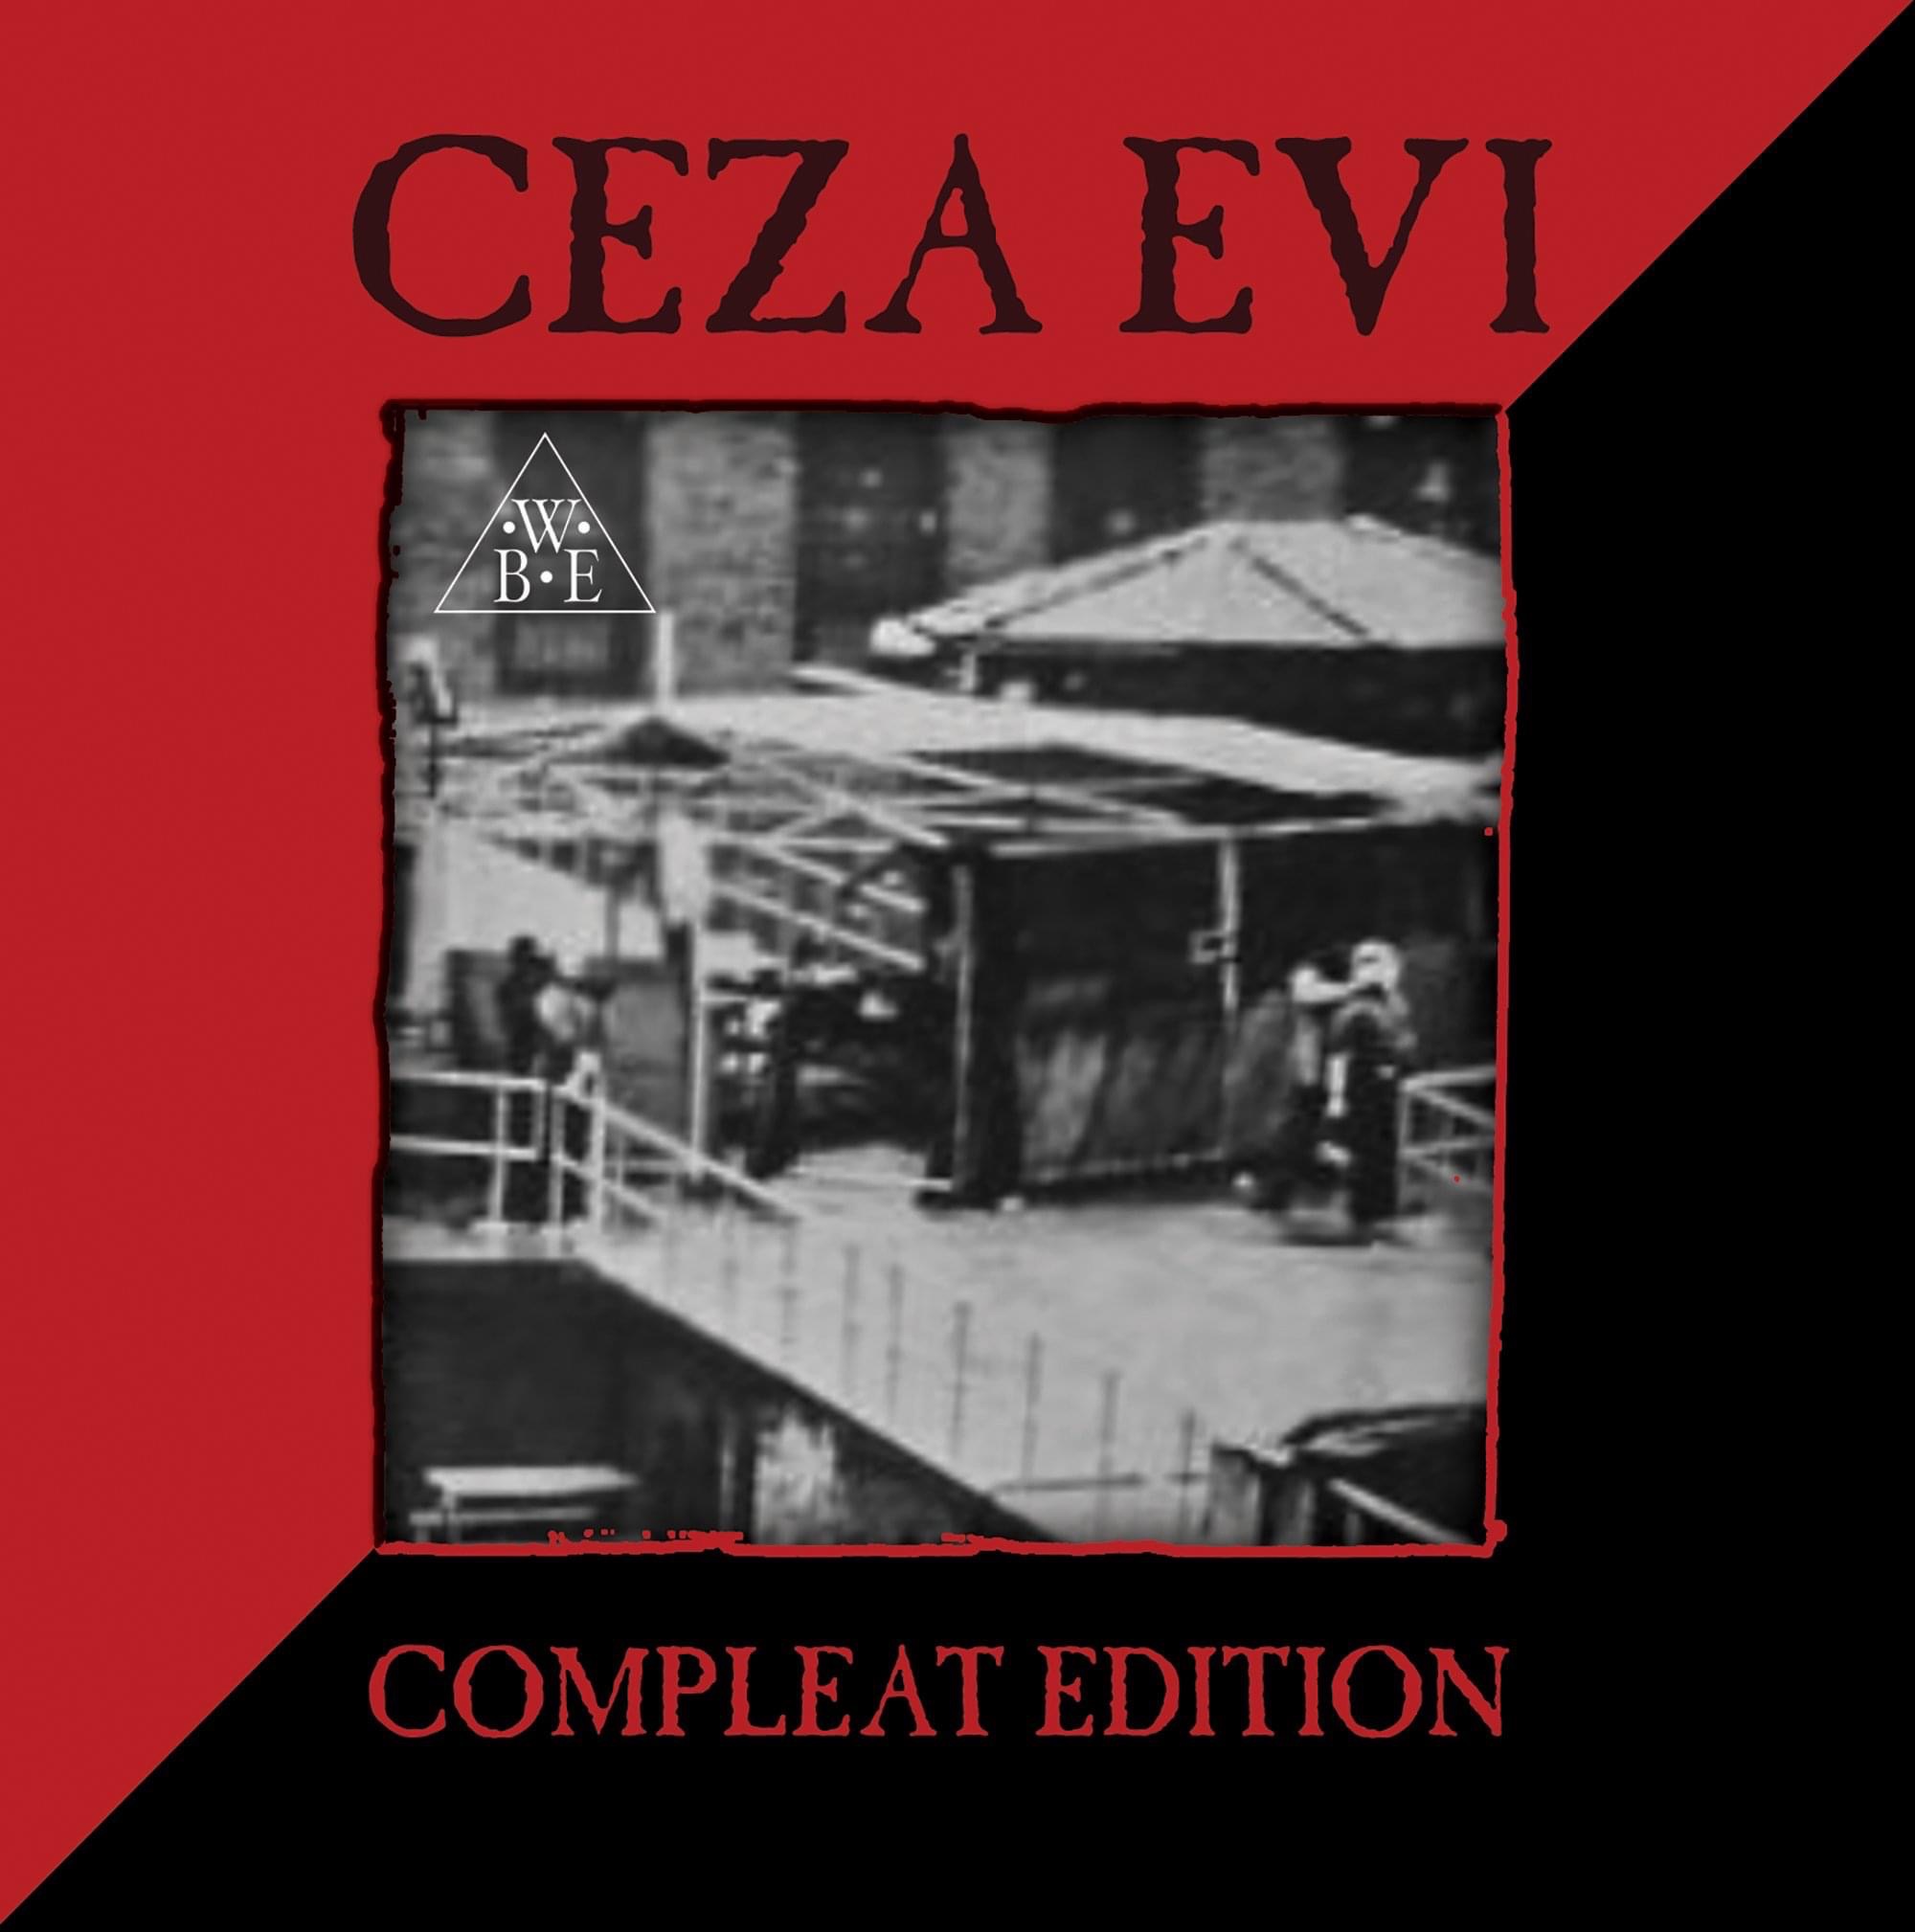 Ceza Evi - compleat edition